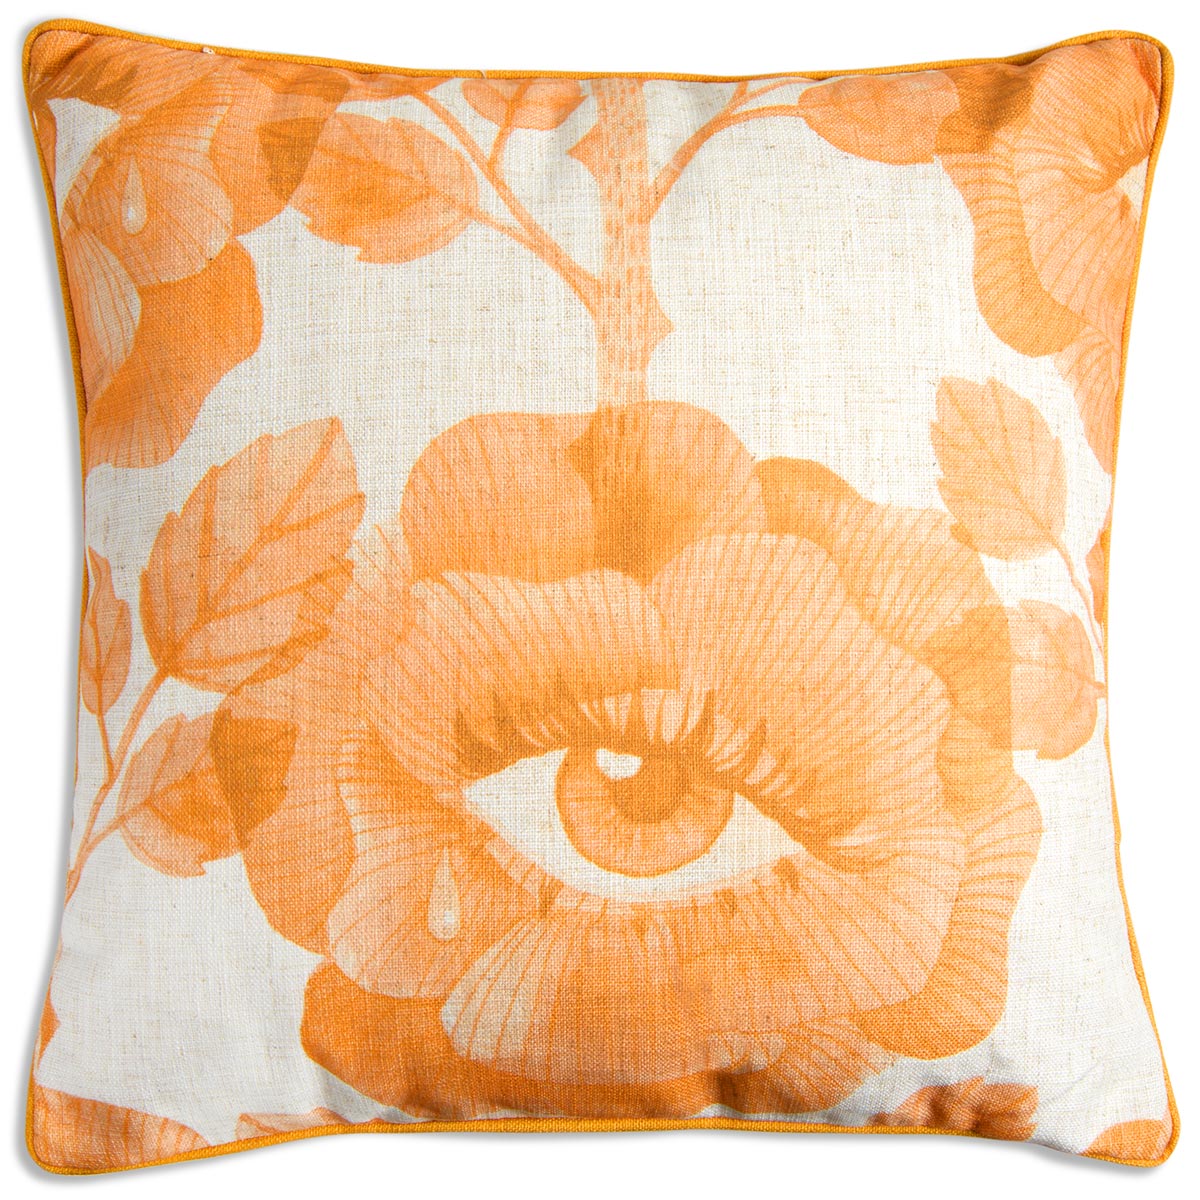 Floral Eyes Pillow in Mustard - ModShop1.com